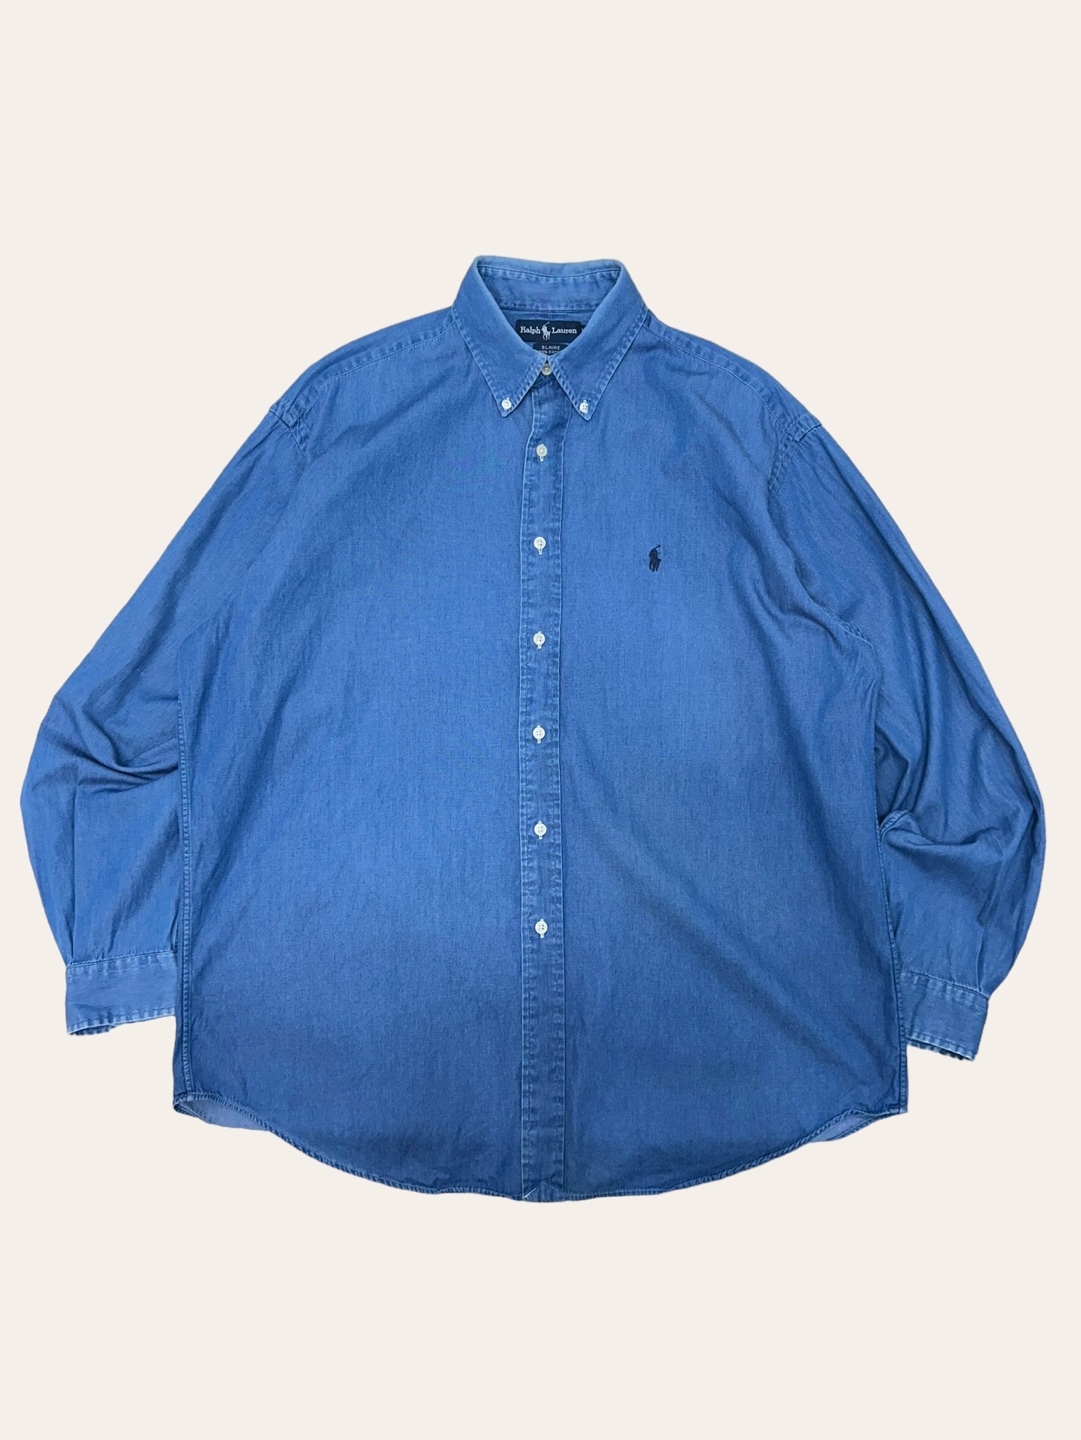 (From USA)Polo ralph lauren denim chambray shirt L